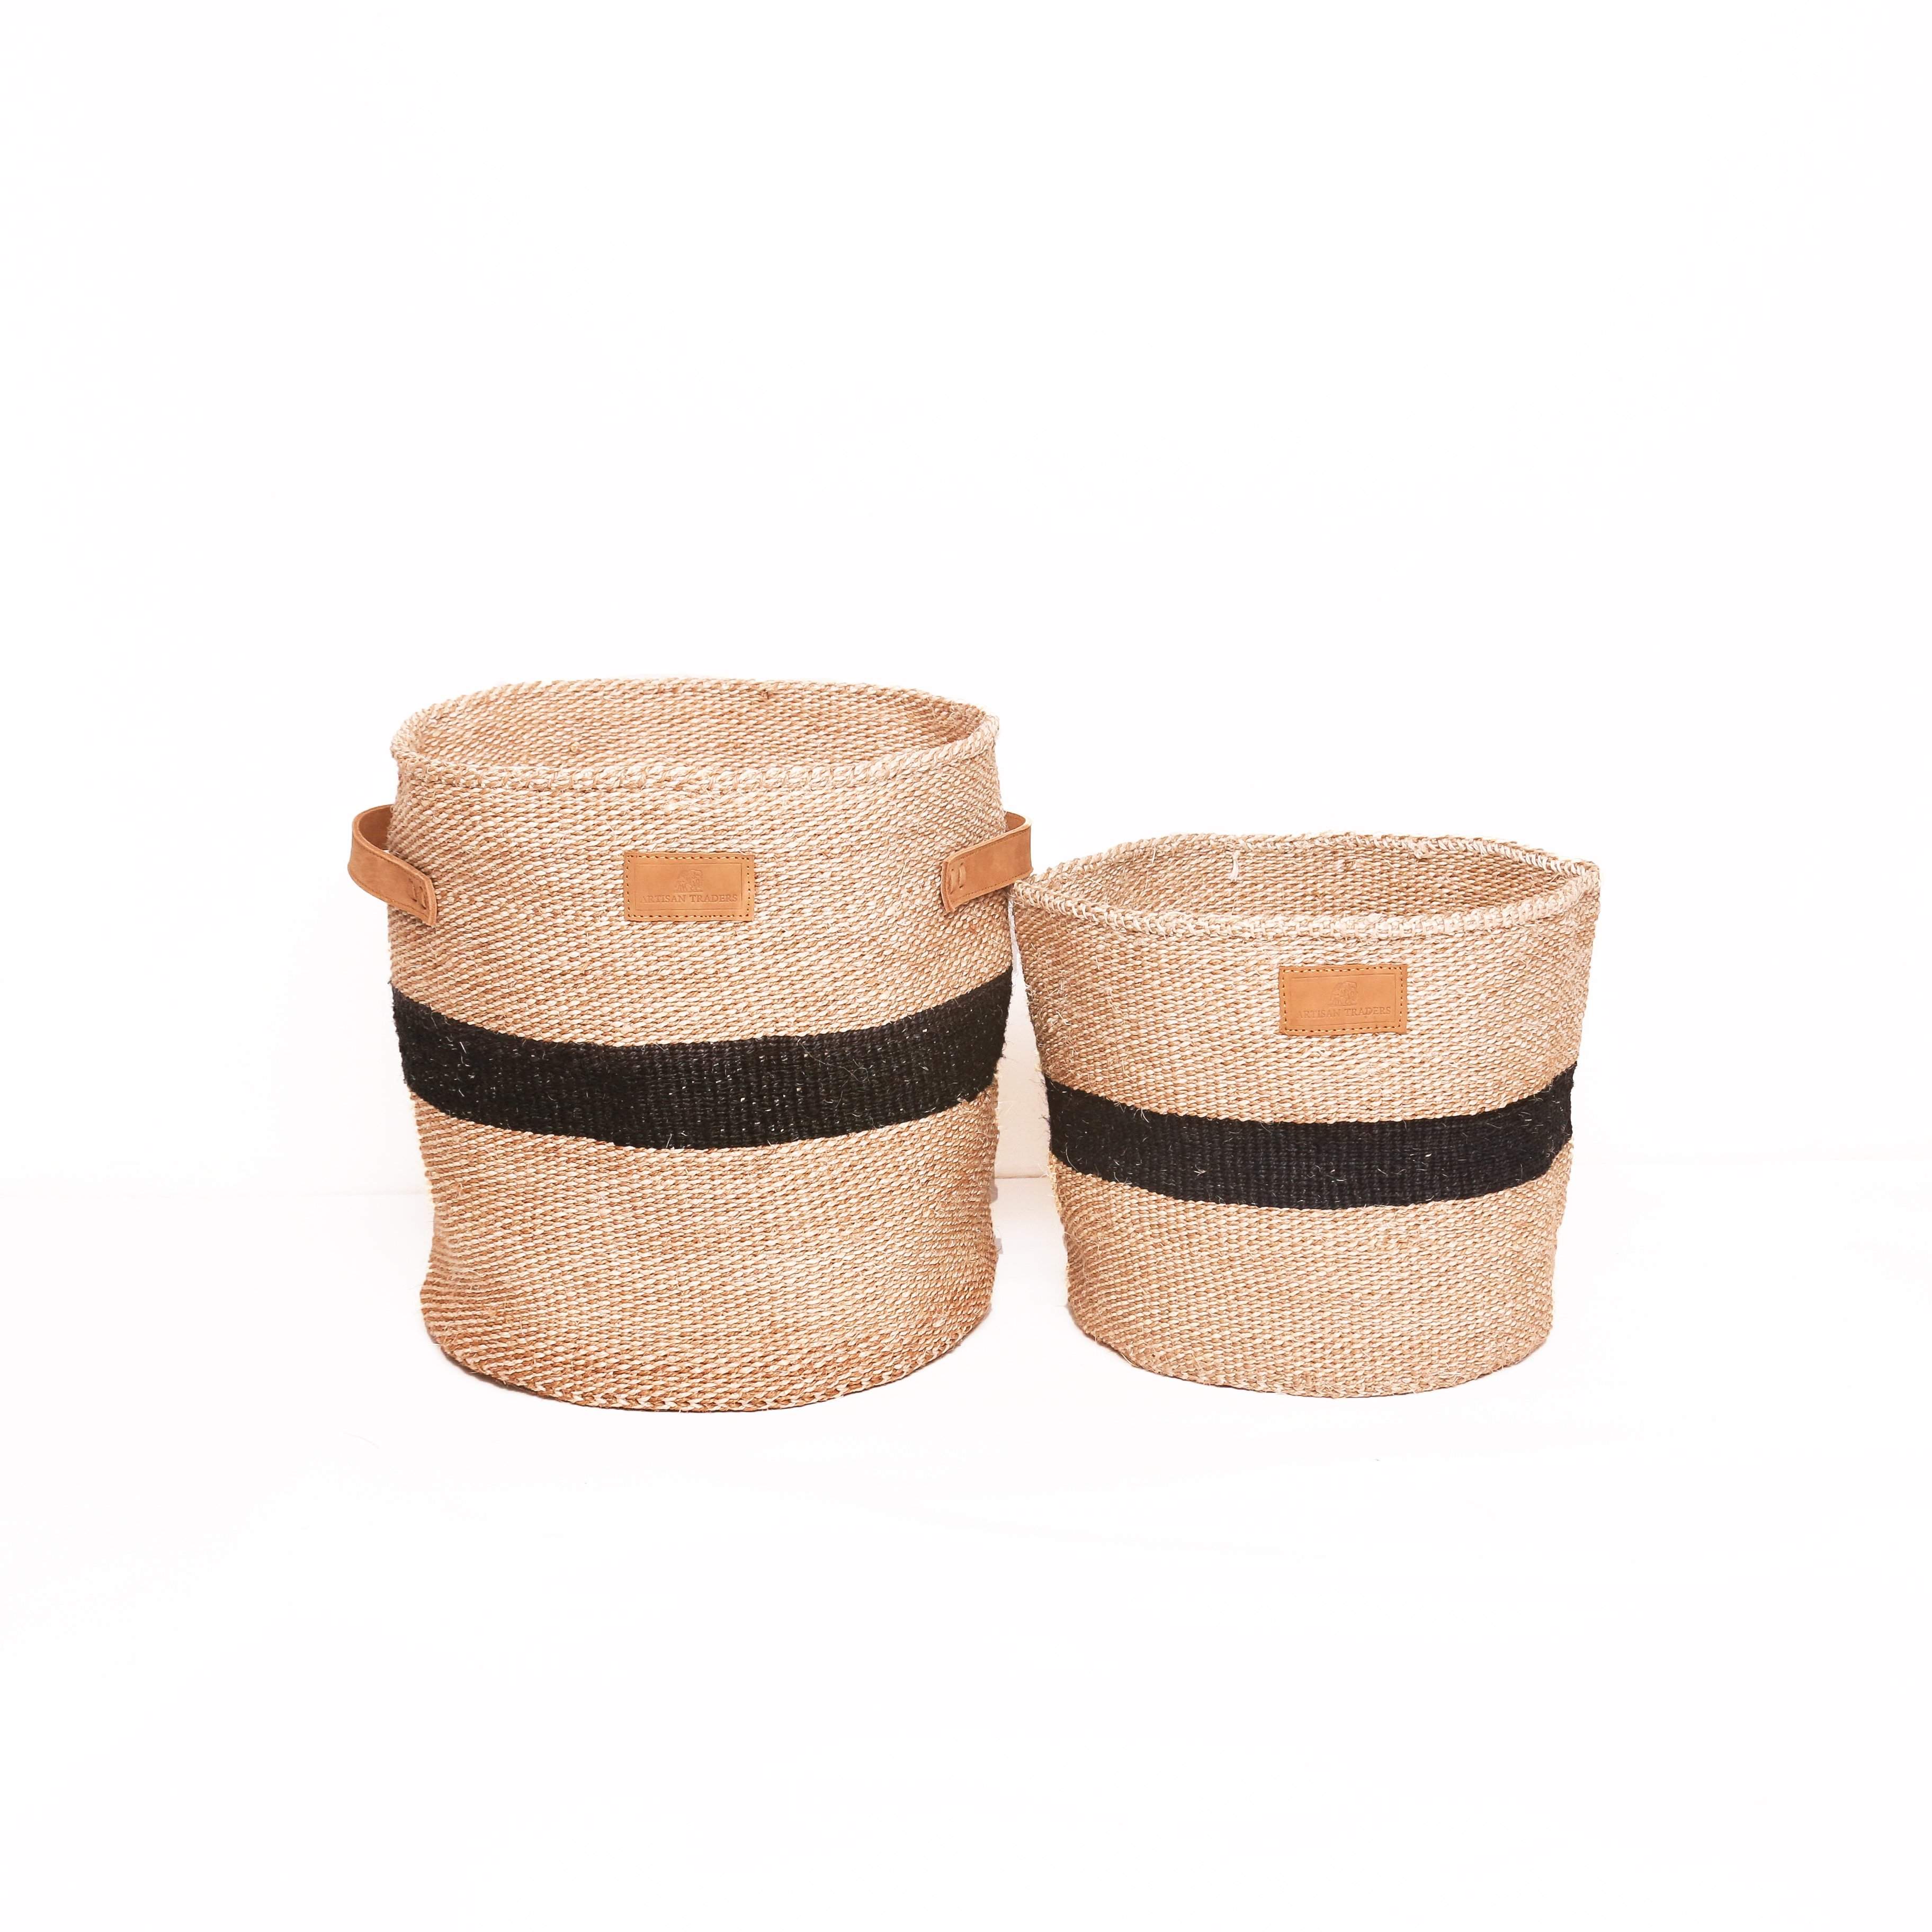 Kiondoo basket Beige black stripe-Artisan Traders-african,african basket,basket,fairtrade,handcrafted,handmade,kenya,kiondo,kiondoo,natural,sisal